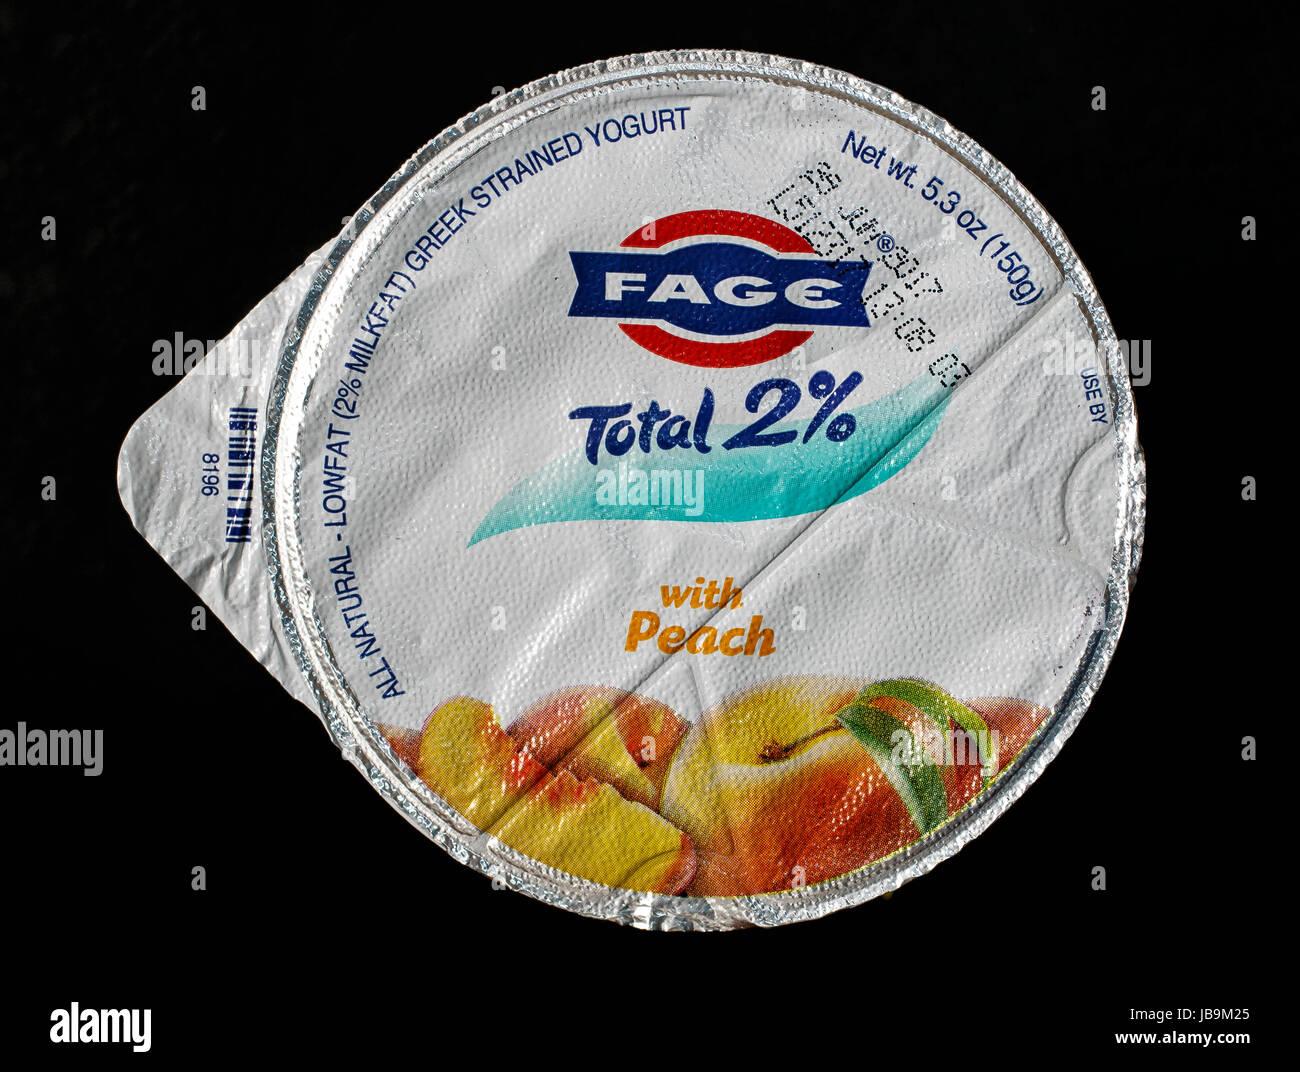 Fage yogurt with peach flavor. Stock Photo